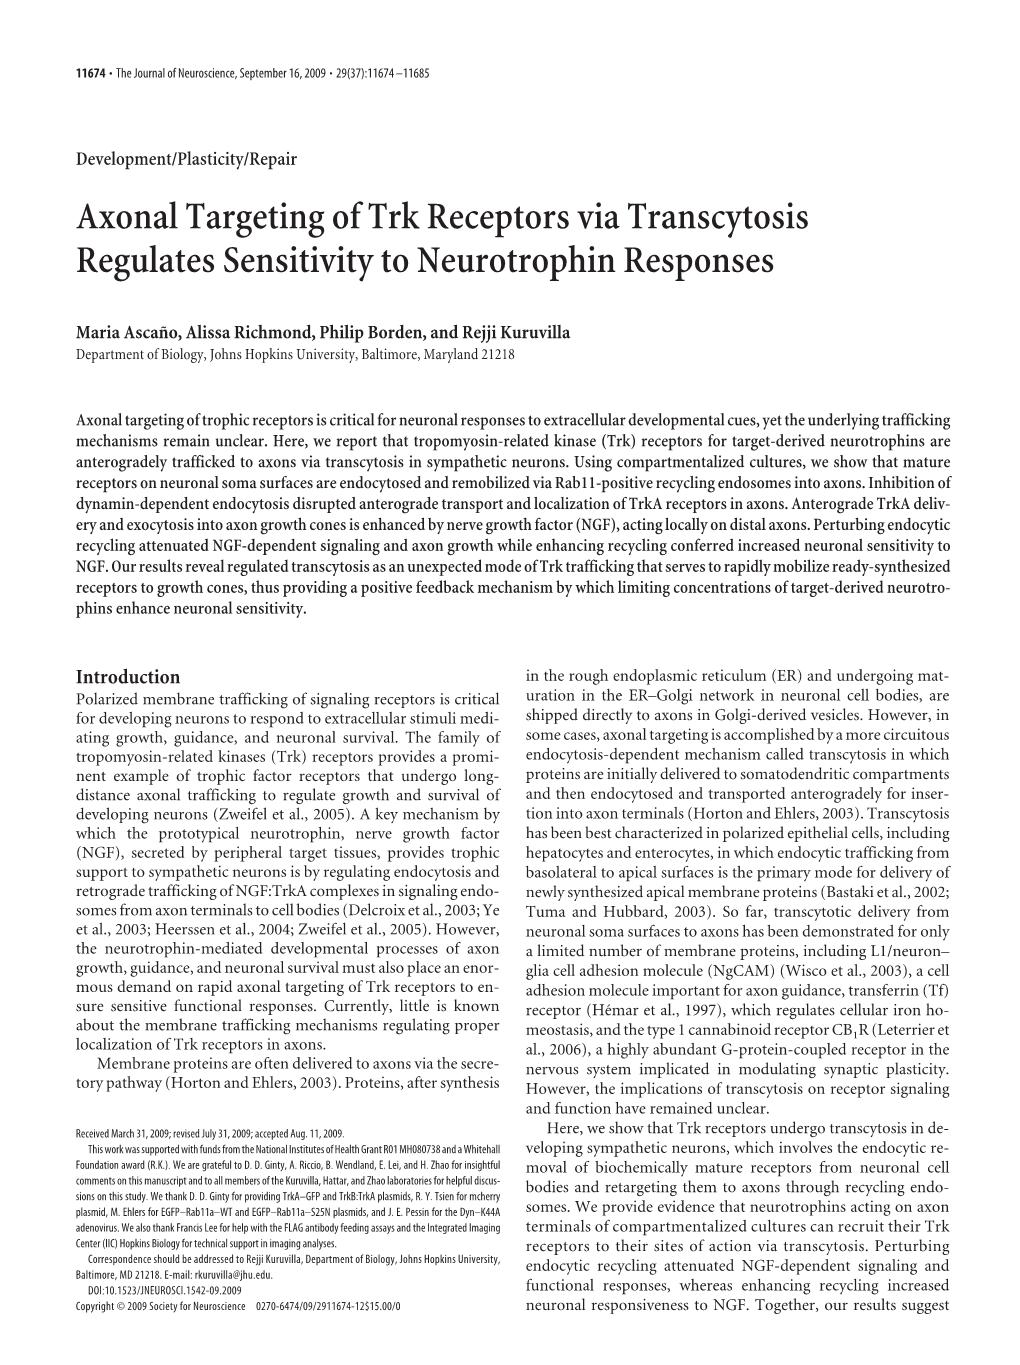 Axonal Targeting of Trk Receptors Via Transcytosis Regulates Sensitivity to Neurotrophin Responses